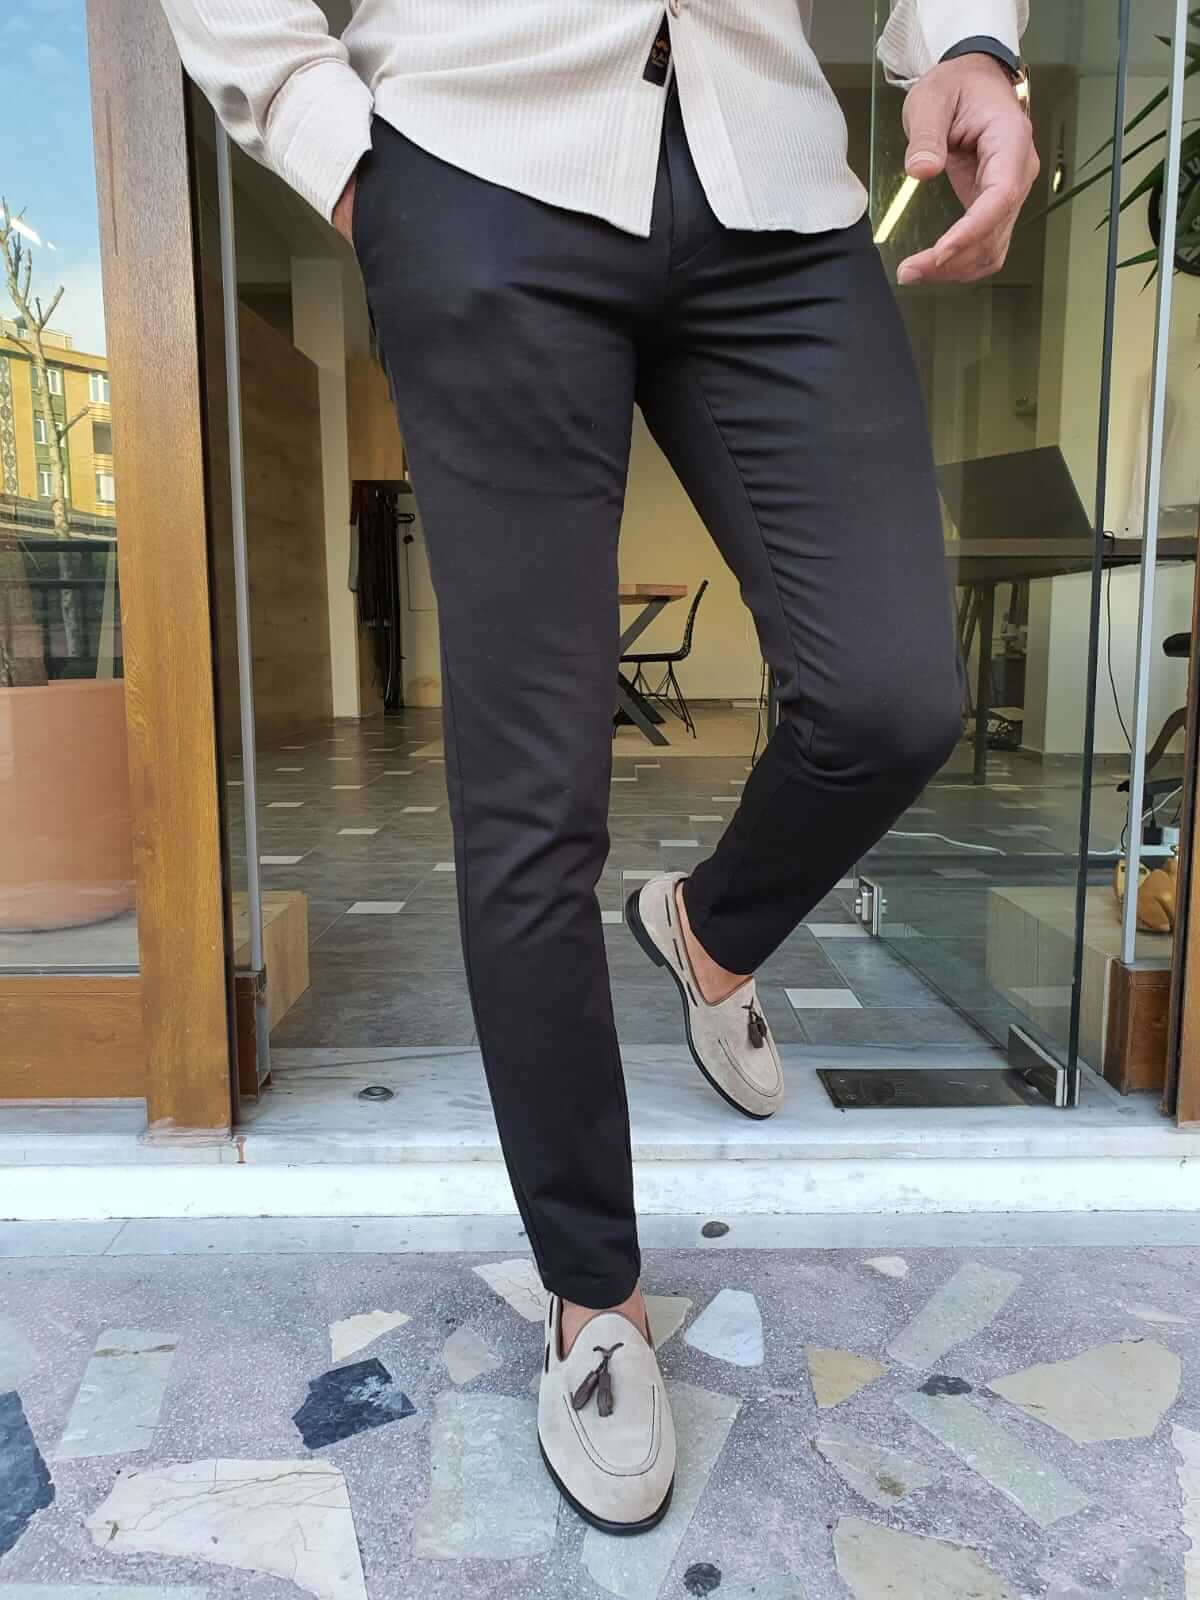 Slim Fit B-91 Formal Grey Check Trouser - Barren